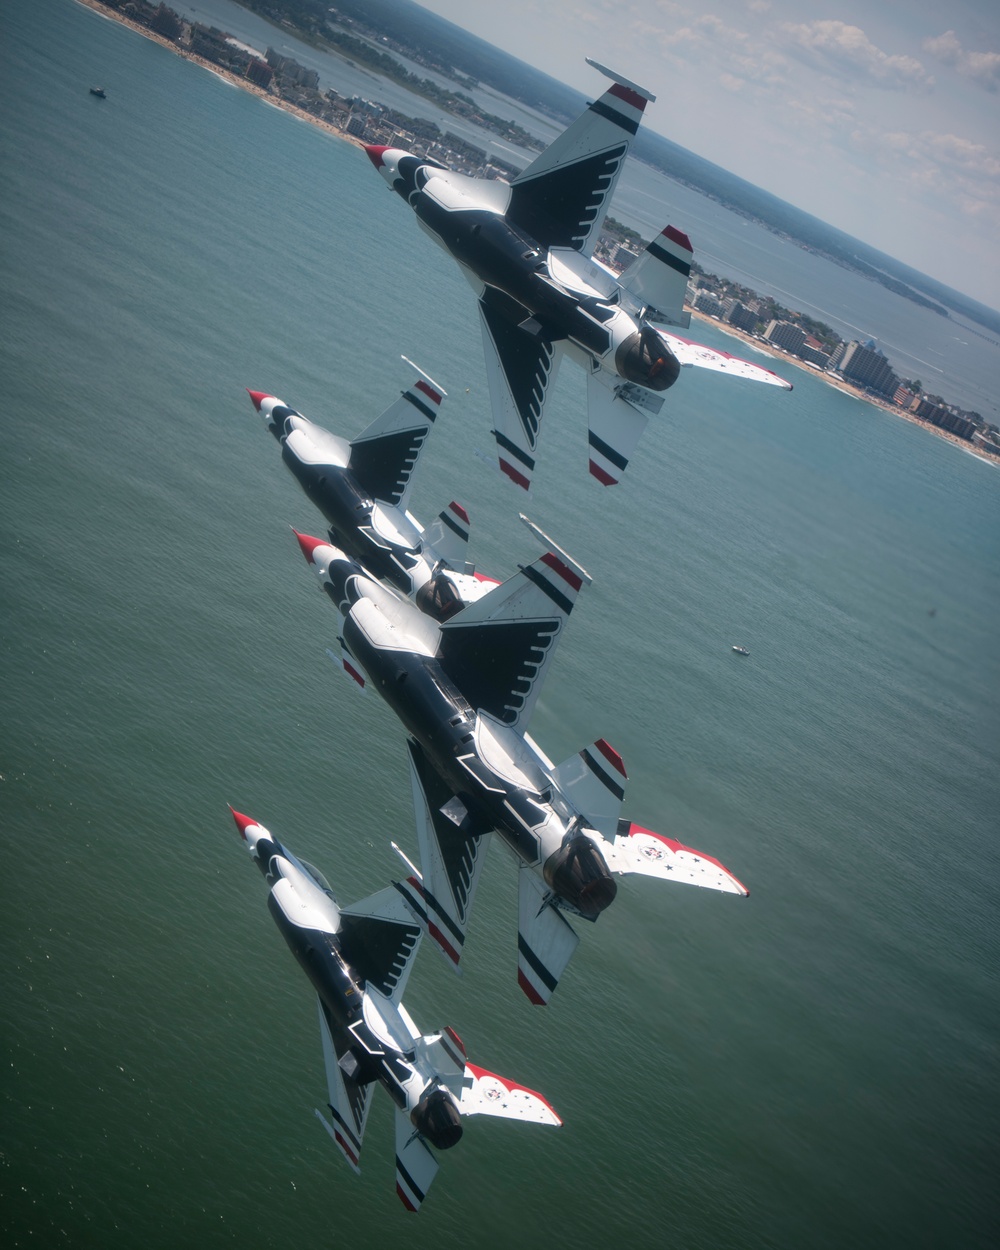 Thunderbirds take flight for OC Air Show